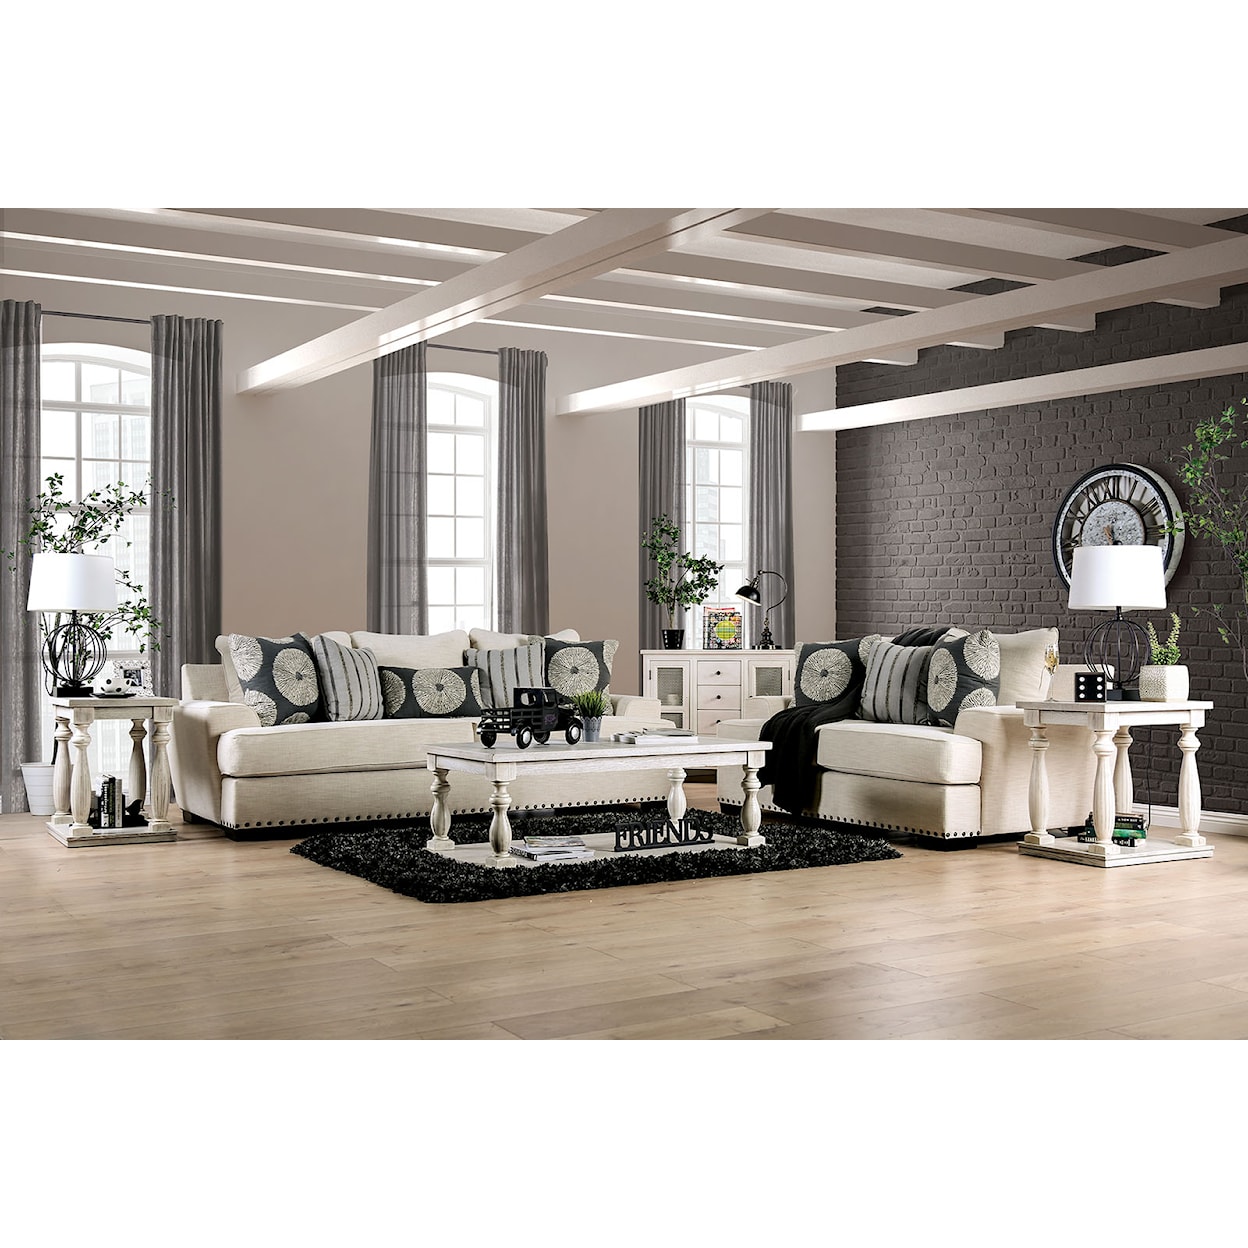 Furniture of America Germaine Sofa